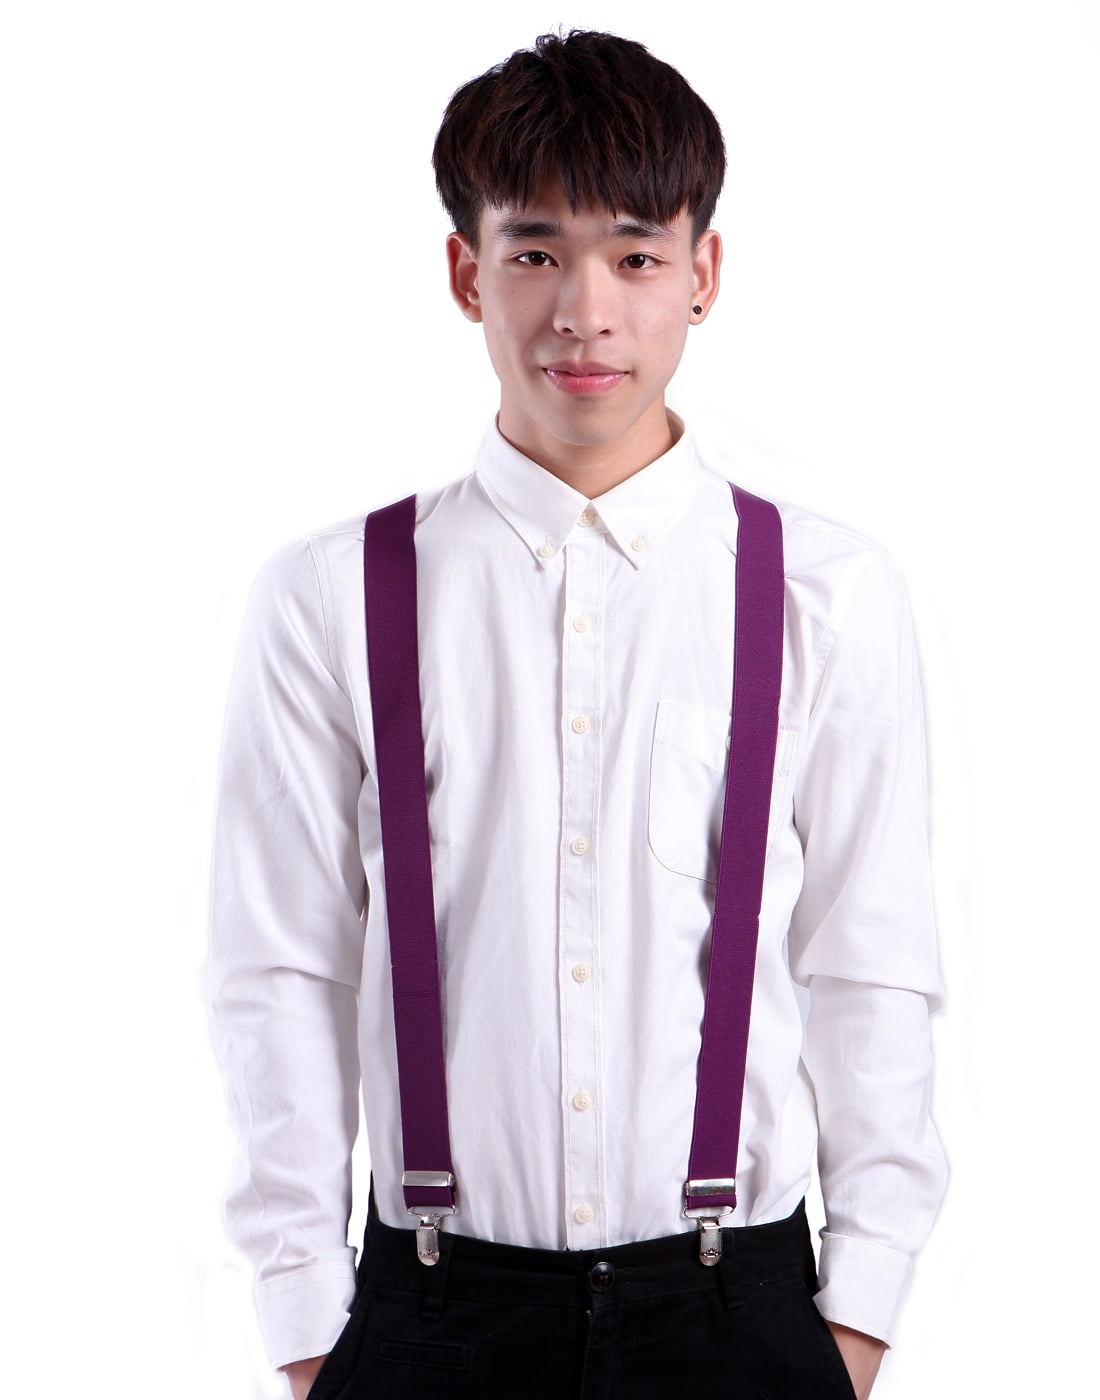 New Extra WIDE Suspender and Bow Tie Elastic Y-Shape 1.5" Wide Suspender